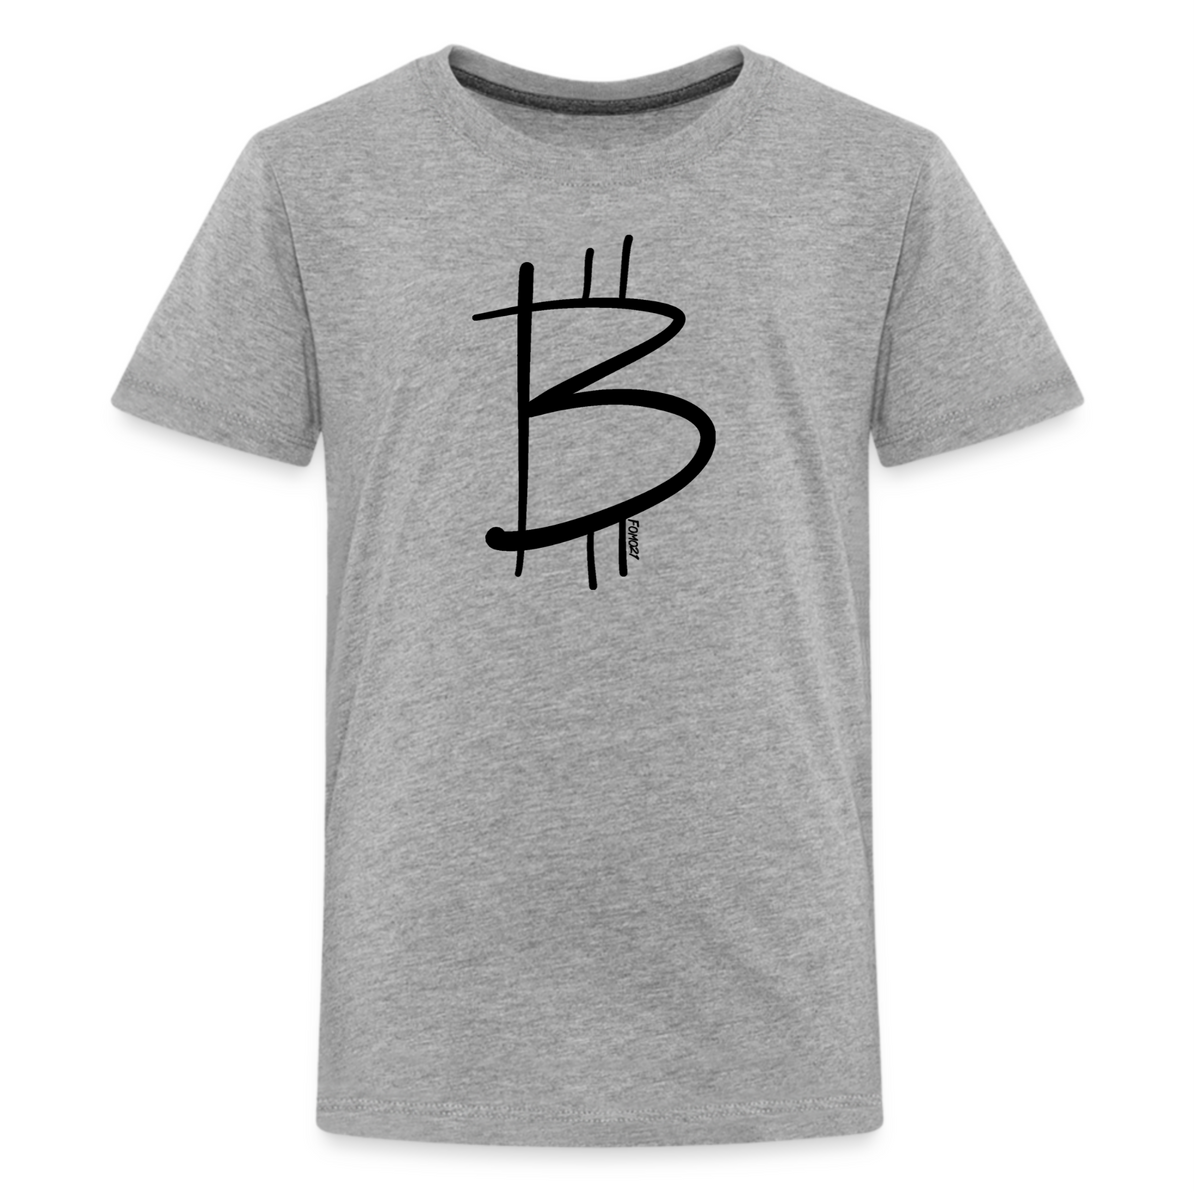 Freehand Bitcoin Youth T-Shirt - fomo21